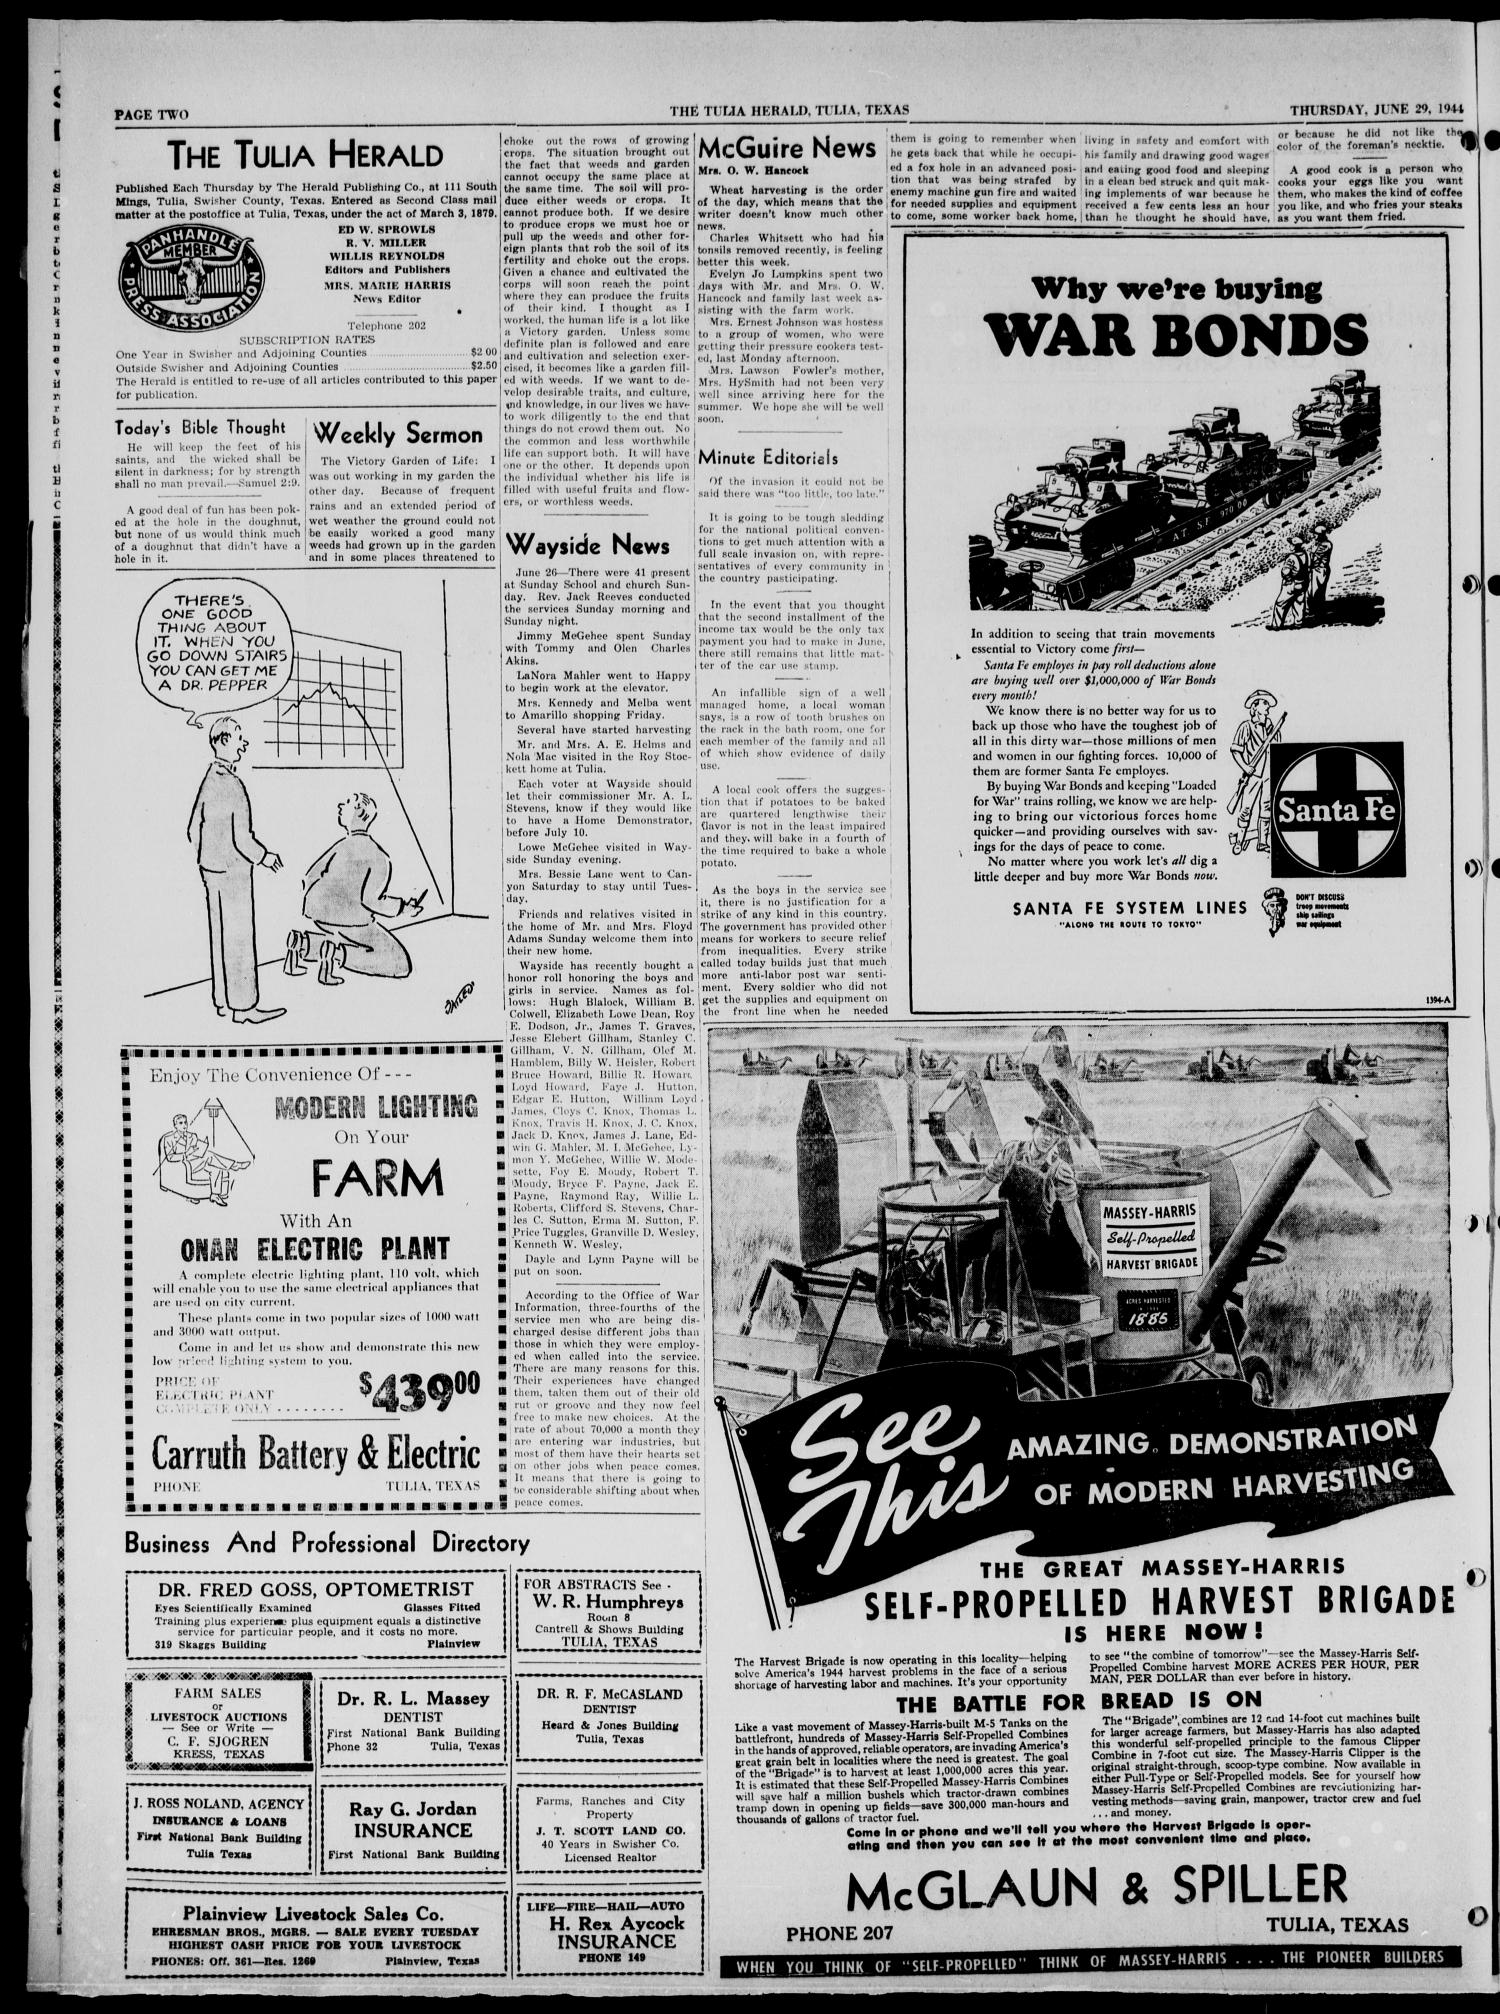 The Tulia Herald (Tulia, Tex), Vol. 35, No. 26, Ed. 1, Thursday, June 29, 1944
                                                
                                                    2
                                                